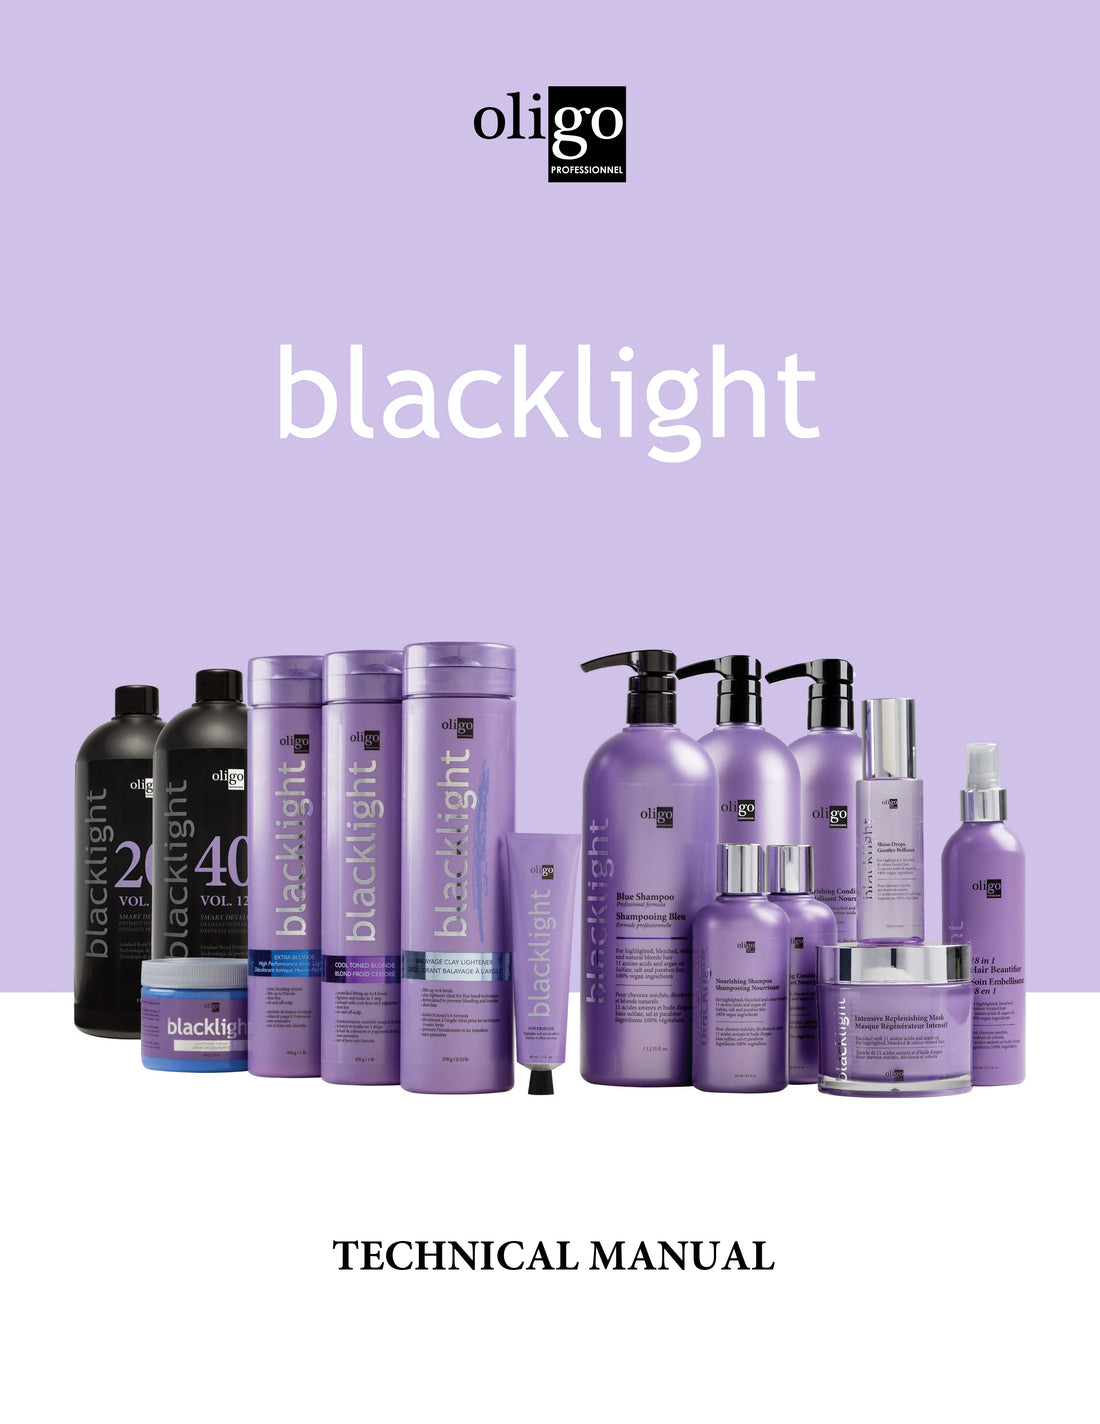 Oligo Blacklight Technical Manual  (digital copy)